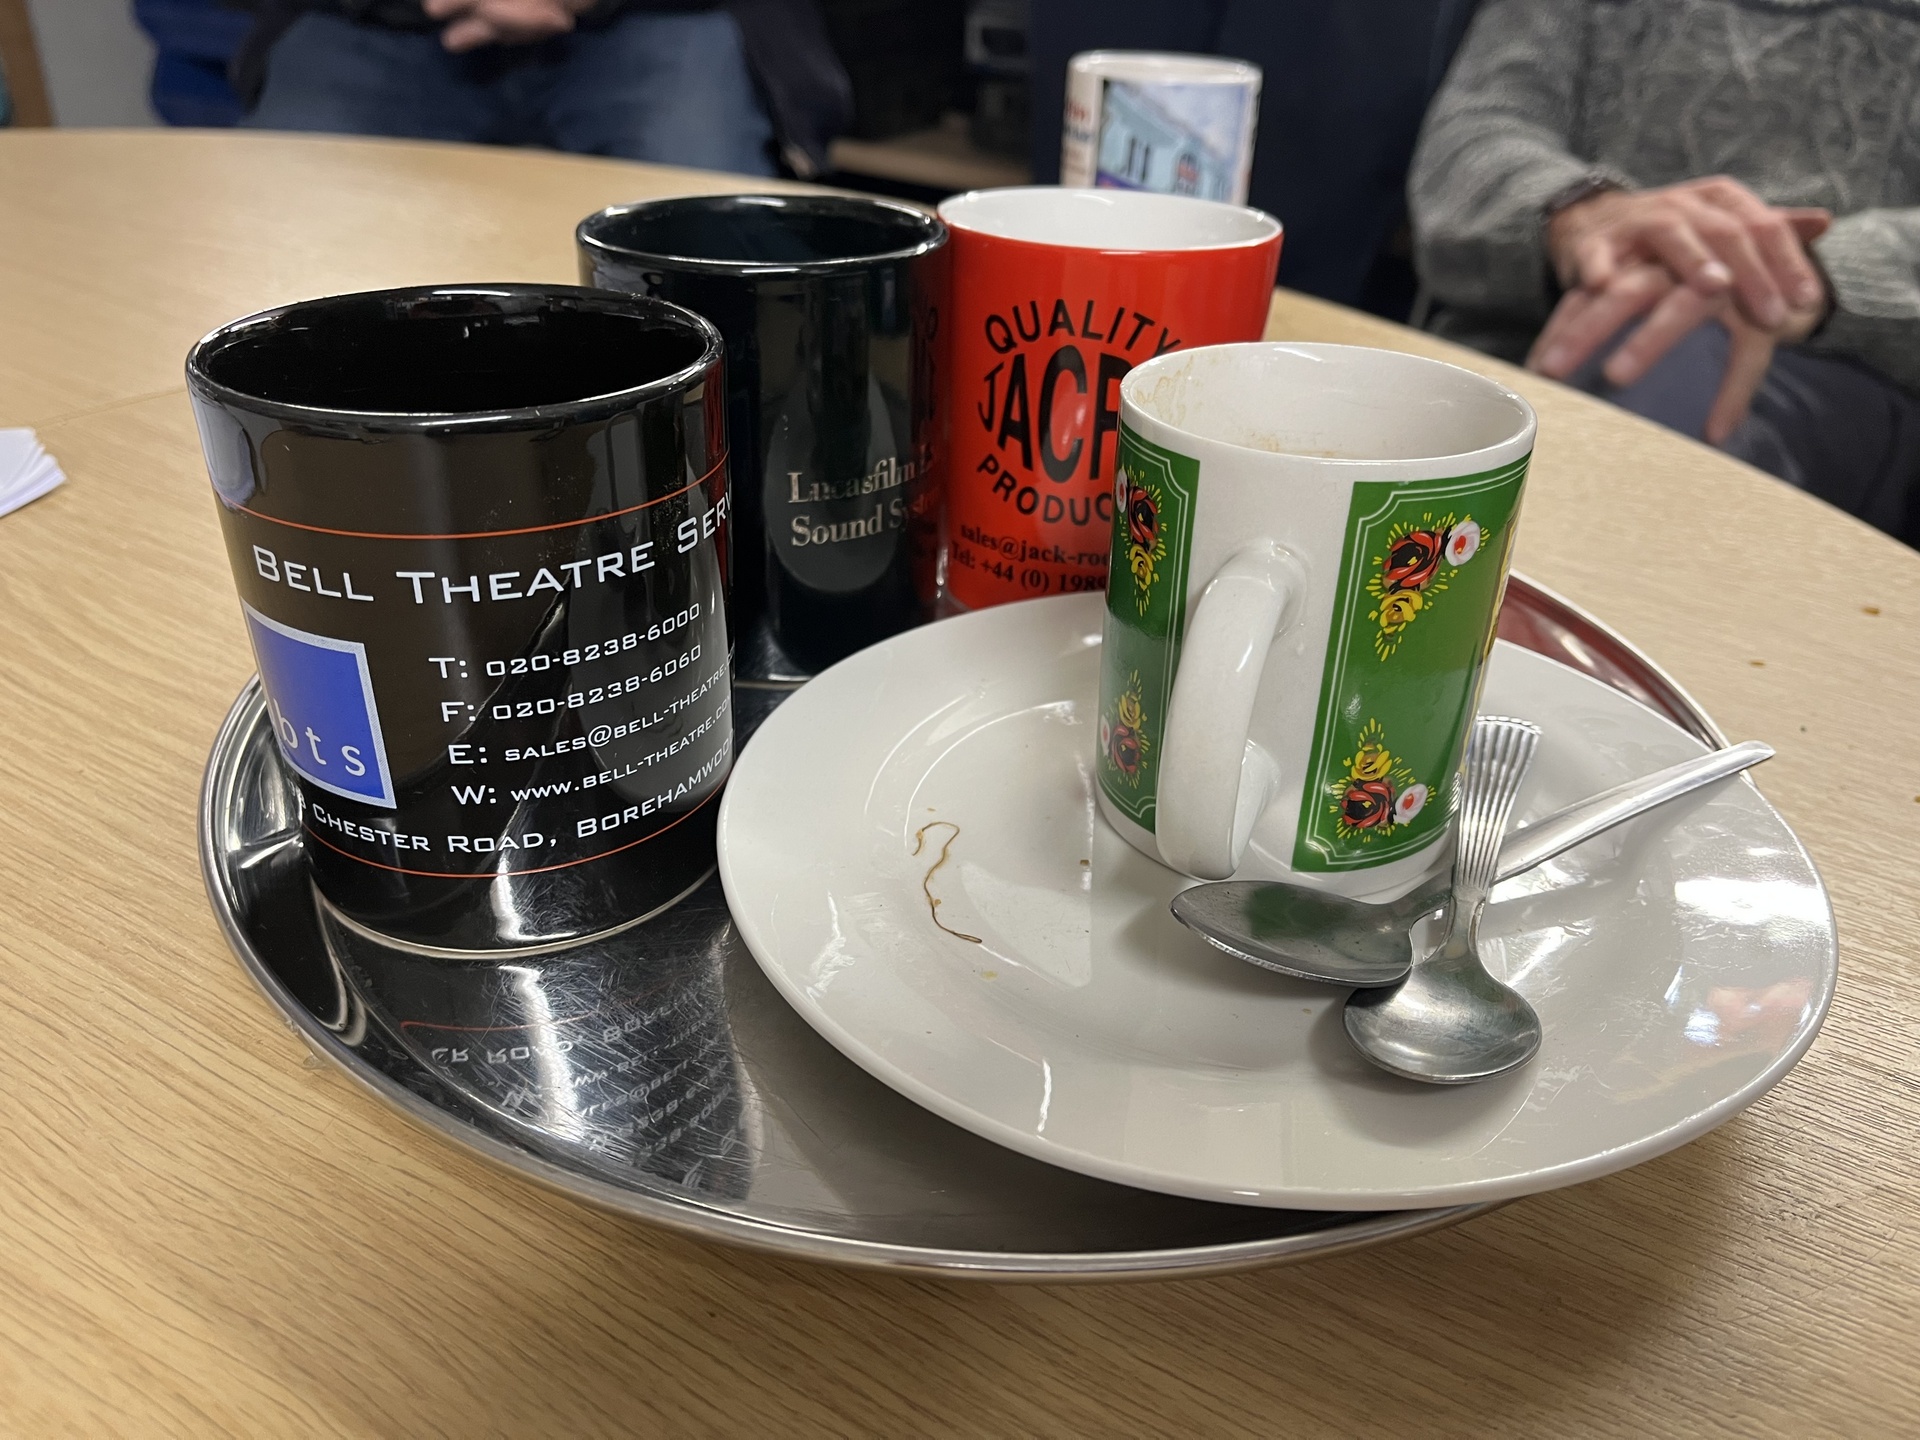 A well deserved tea break afterwards, featuring cinema themed mugs